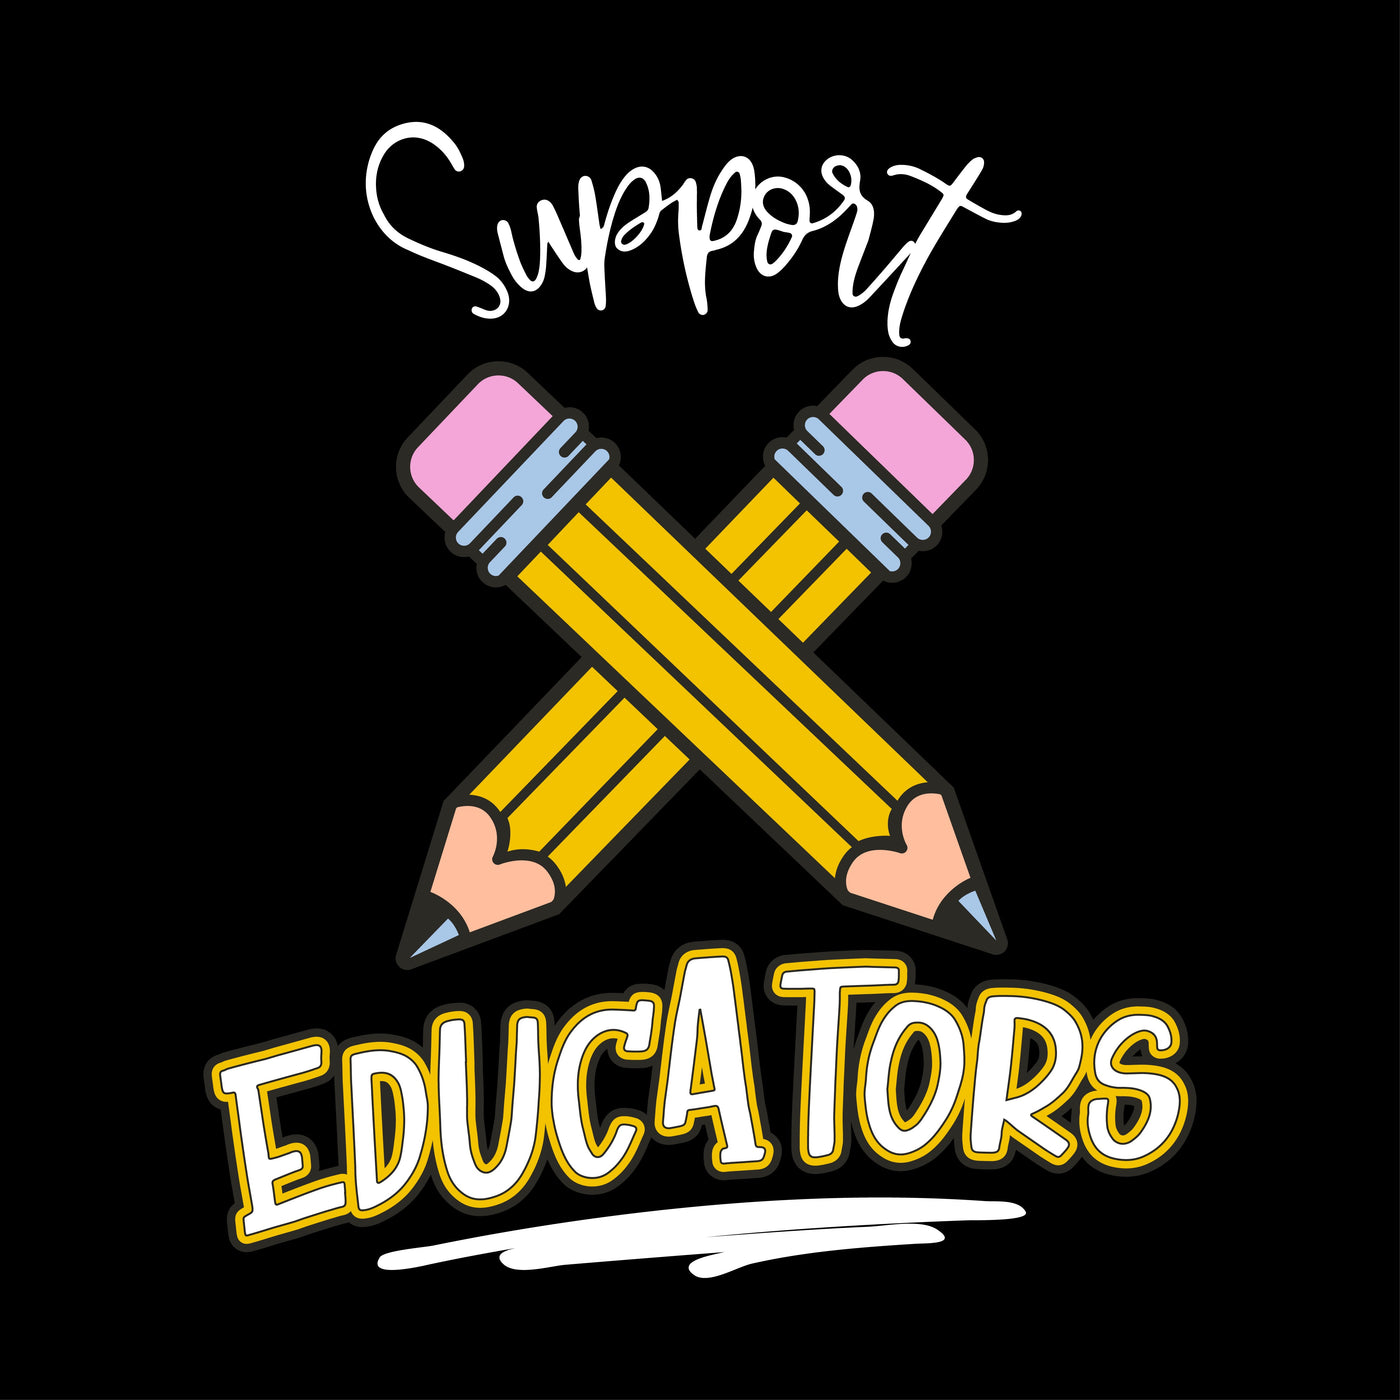 Support Educators